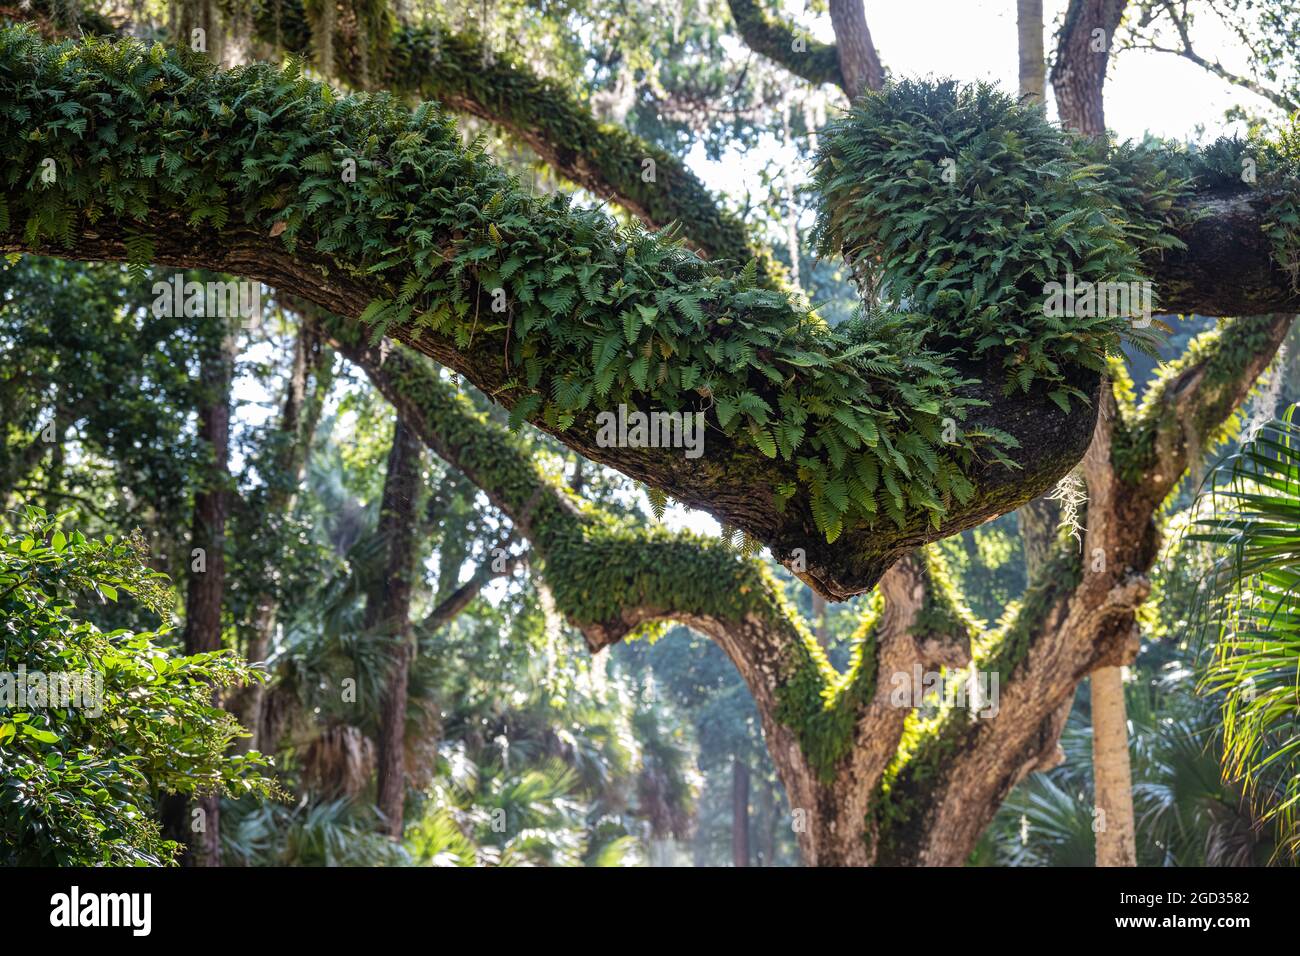 Florida oak trees with resurrection ferns at the beautiful Washington Oaks Gardens State Park in Palm Coast, Florida. (USA) Stock Photo